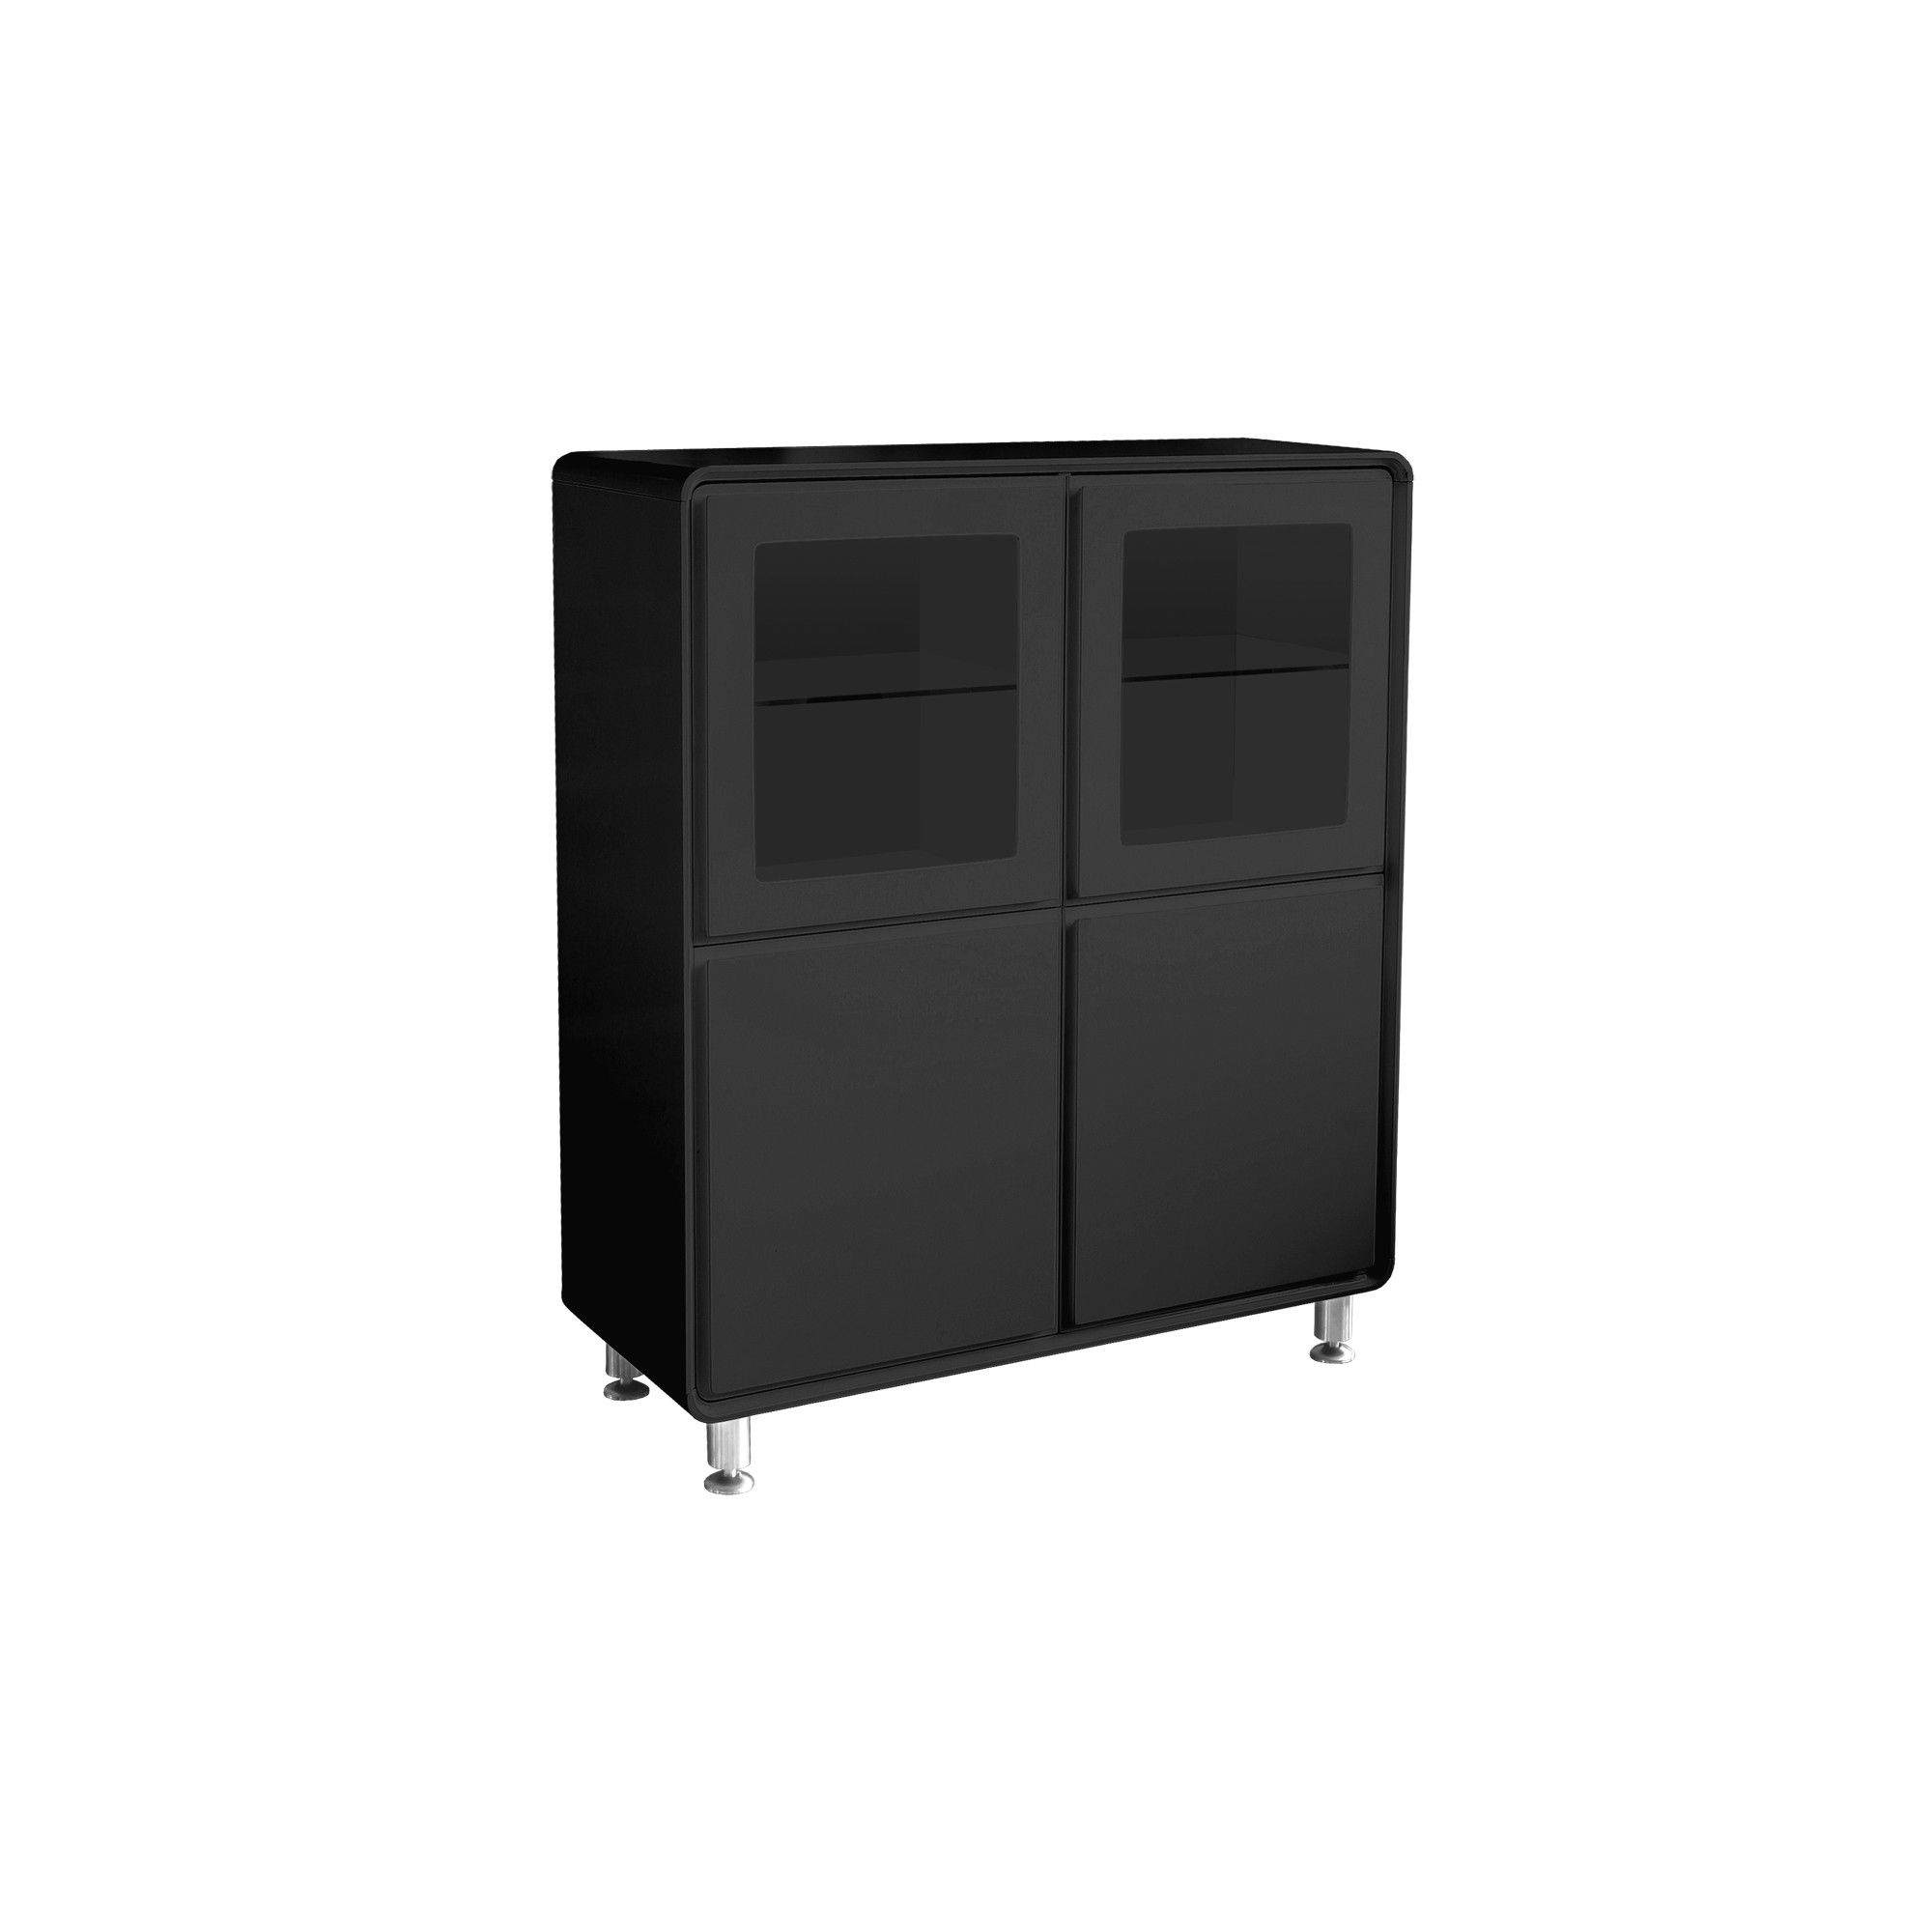 Home Essence Edana Storage Unit - Black at Tesco Direct